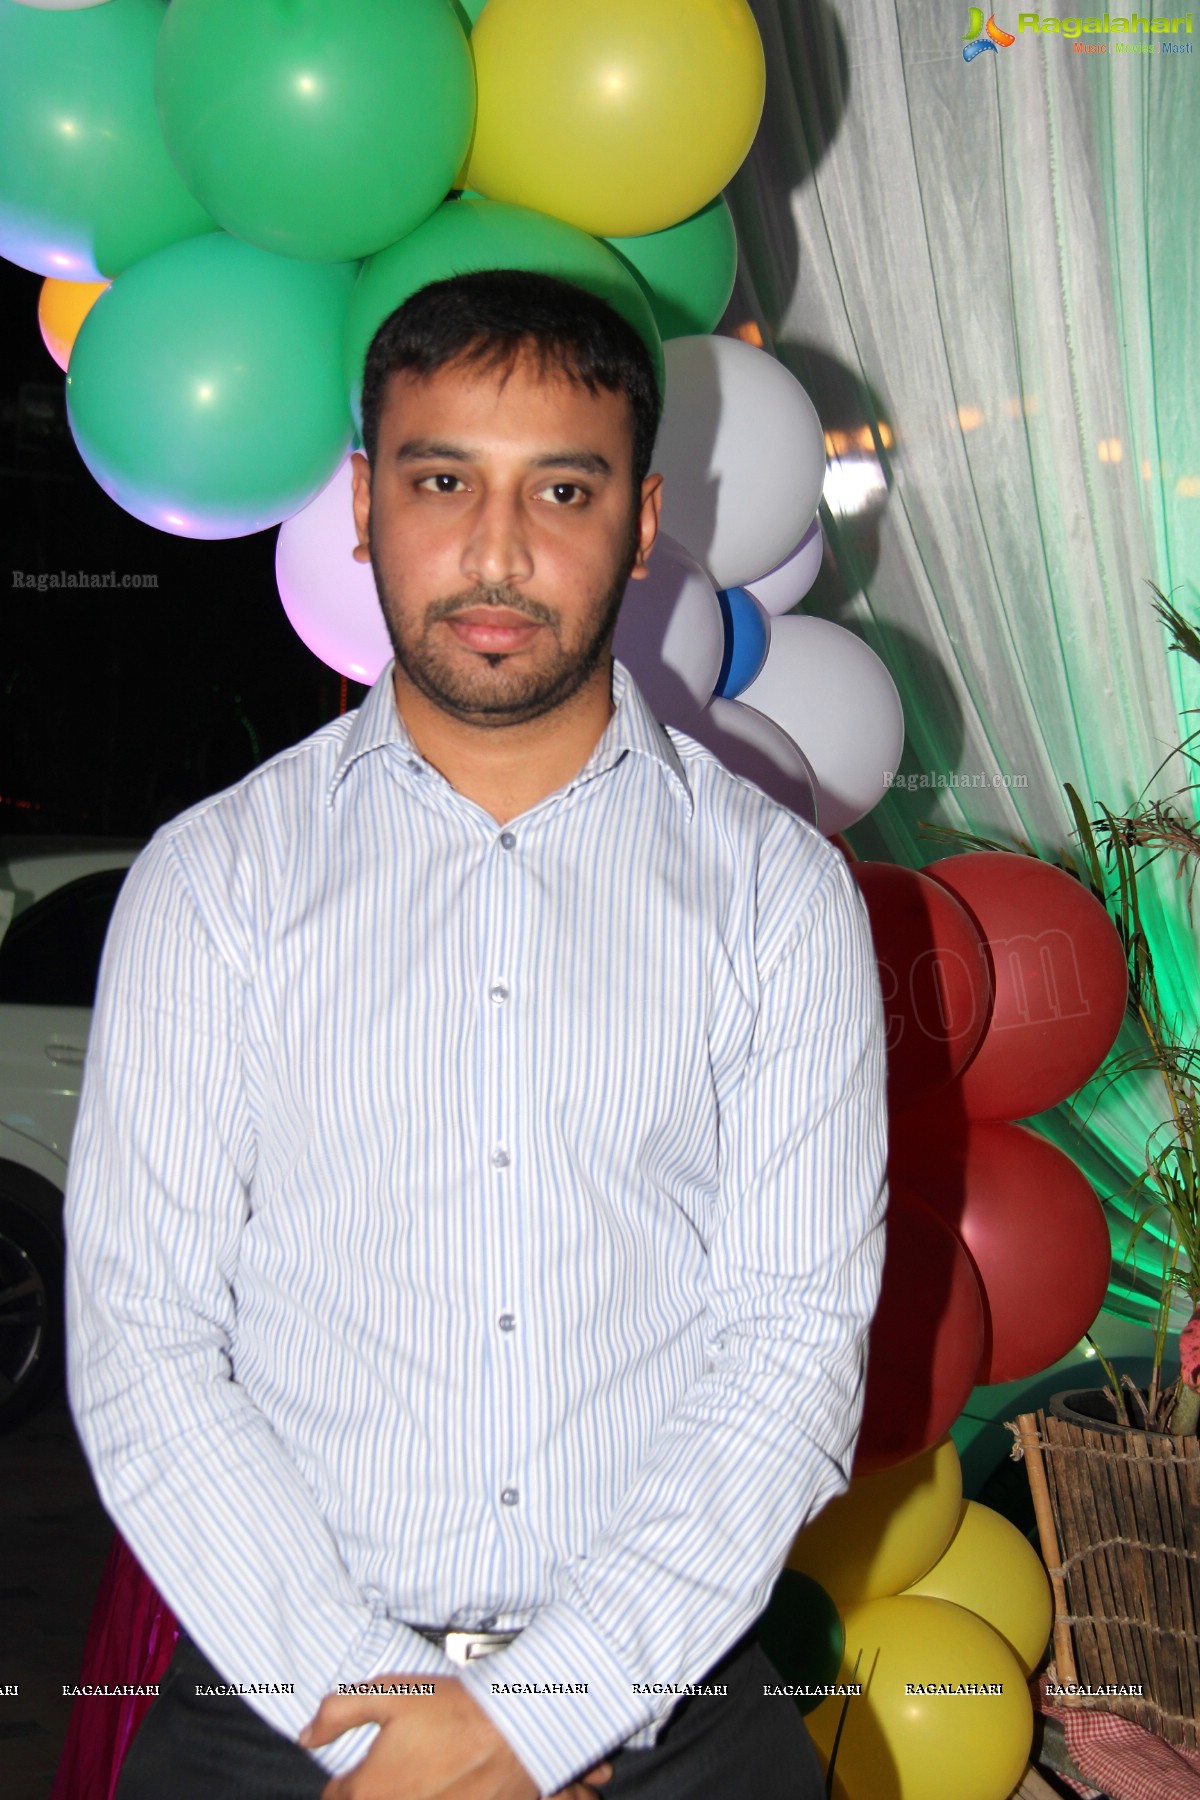 Dr. Hussain & Dr. Farheen's son Raza Birthday Party 2013